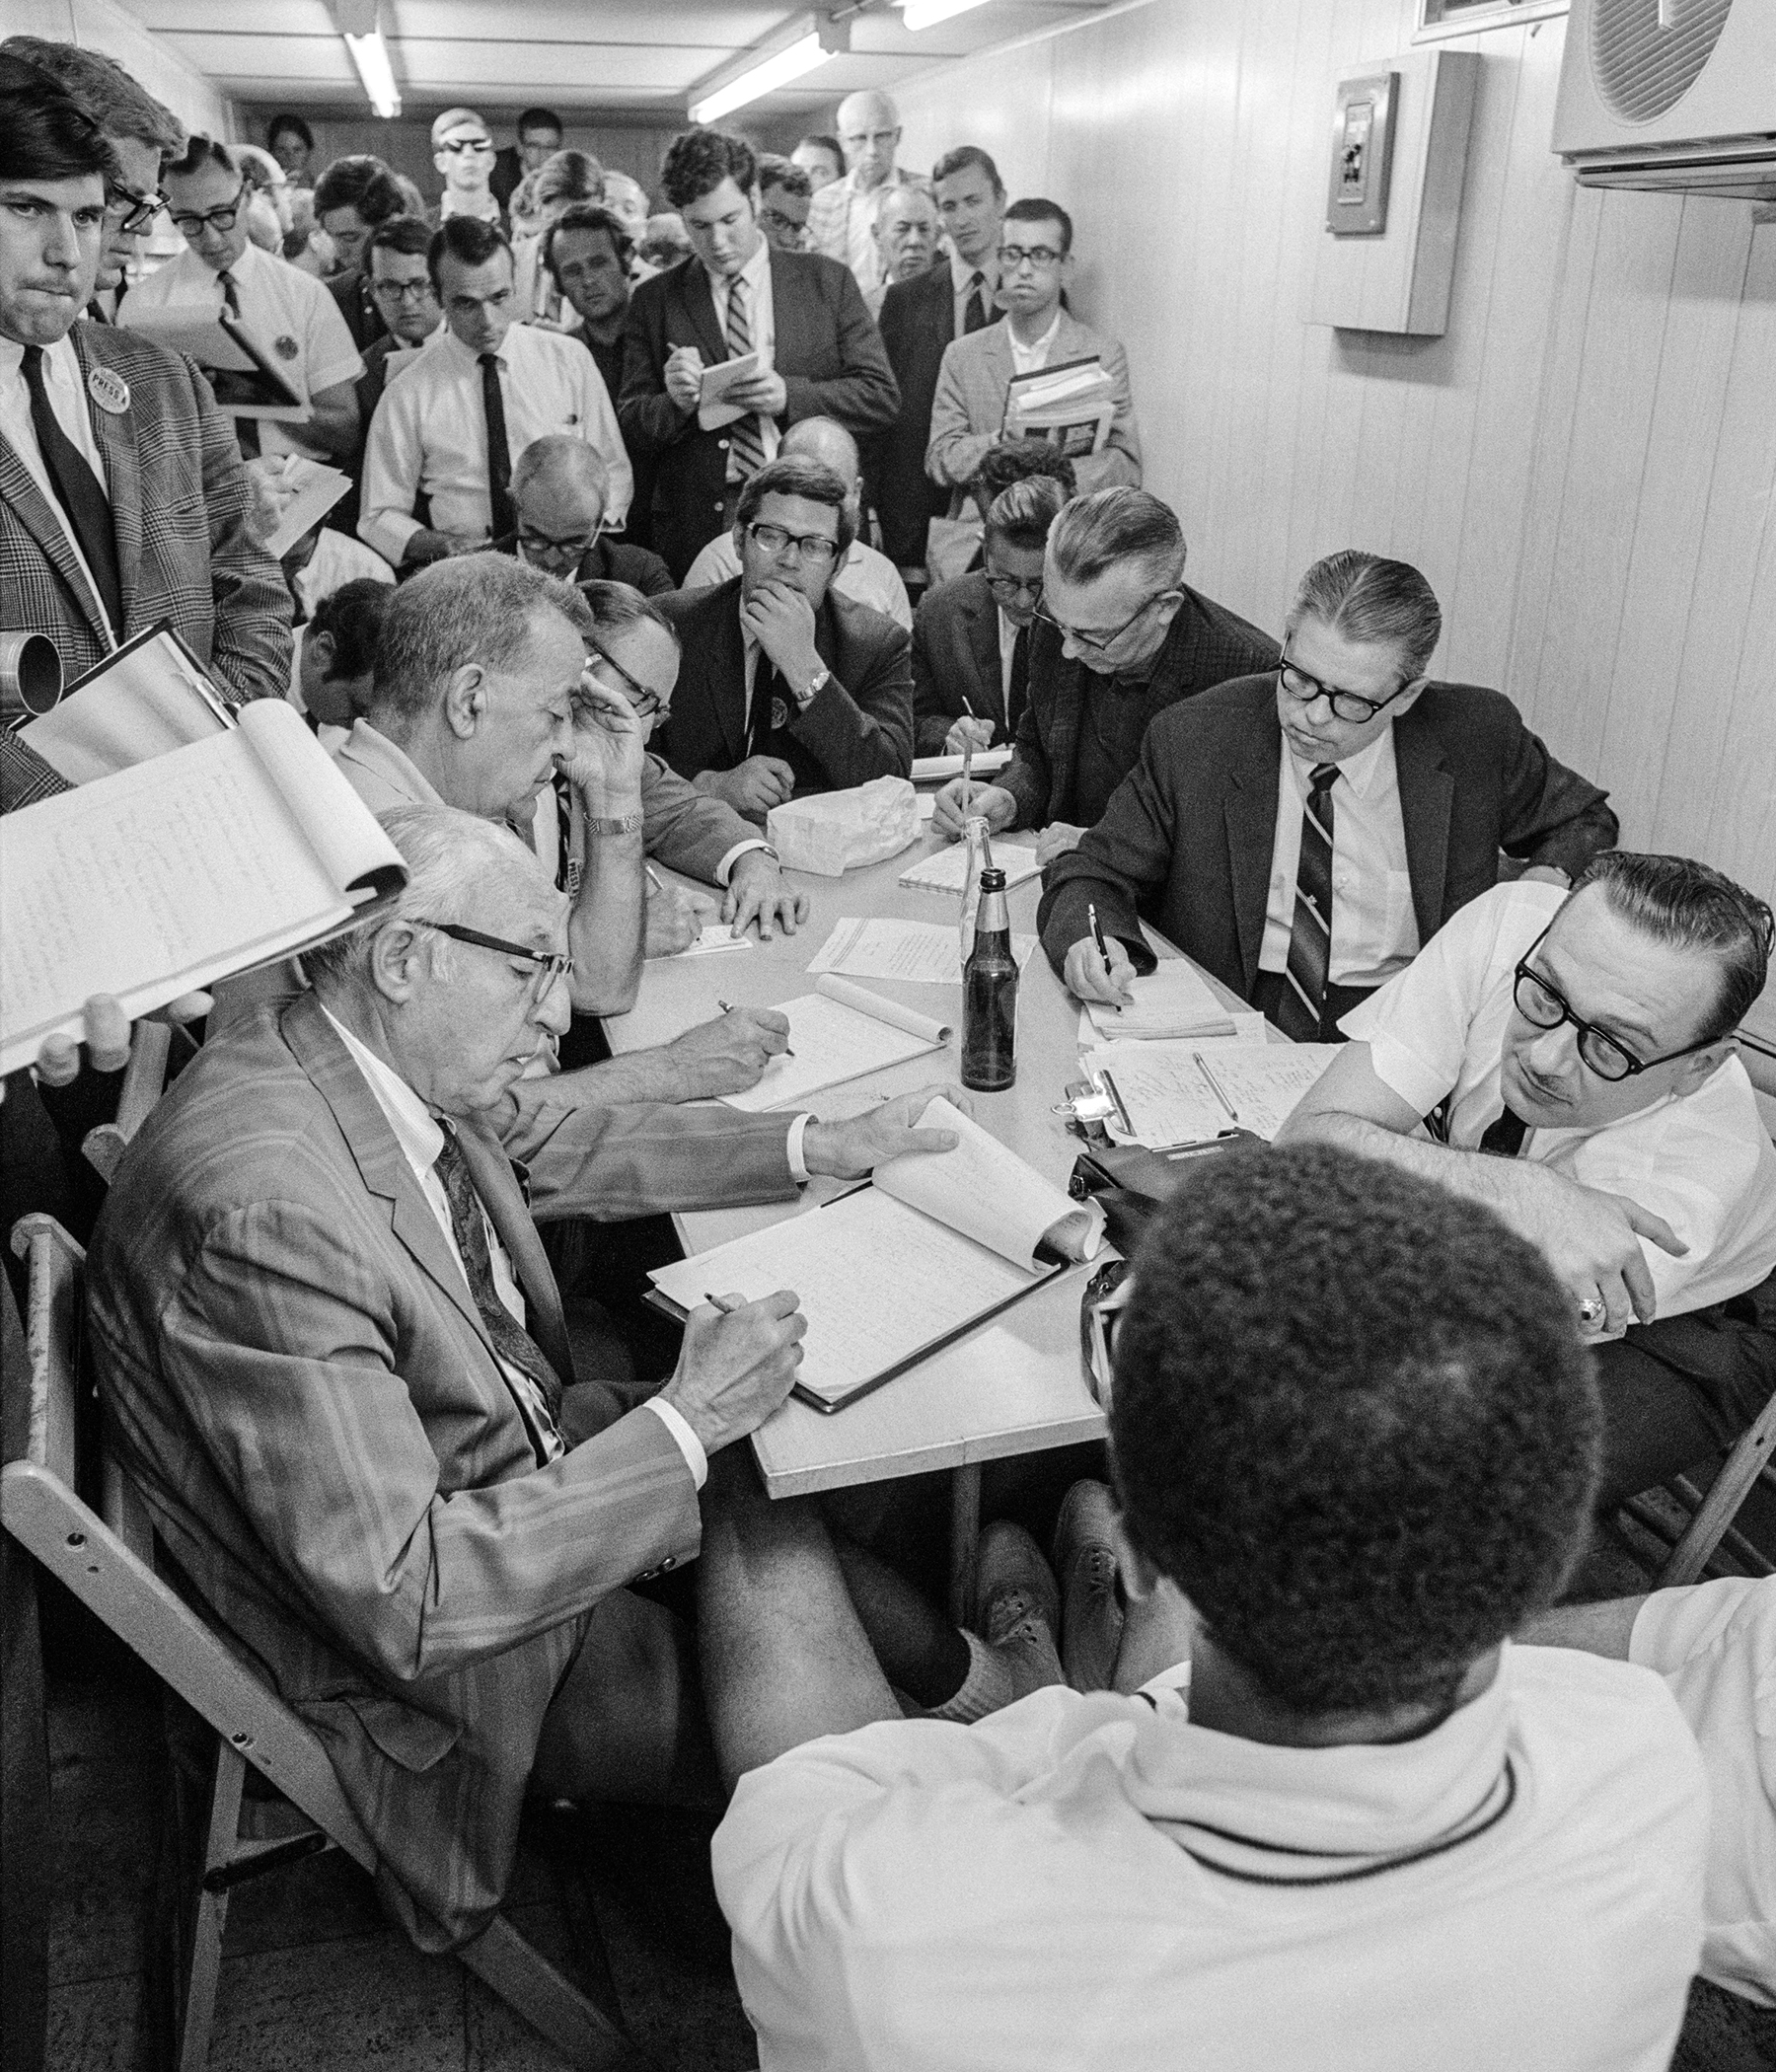 Arthur Ashe meets the press after winning the 1968 US Open Men's Tennis Championship, September 9, 1968. Photo by John G. Zimmerman.